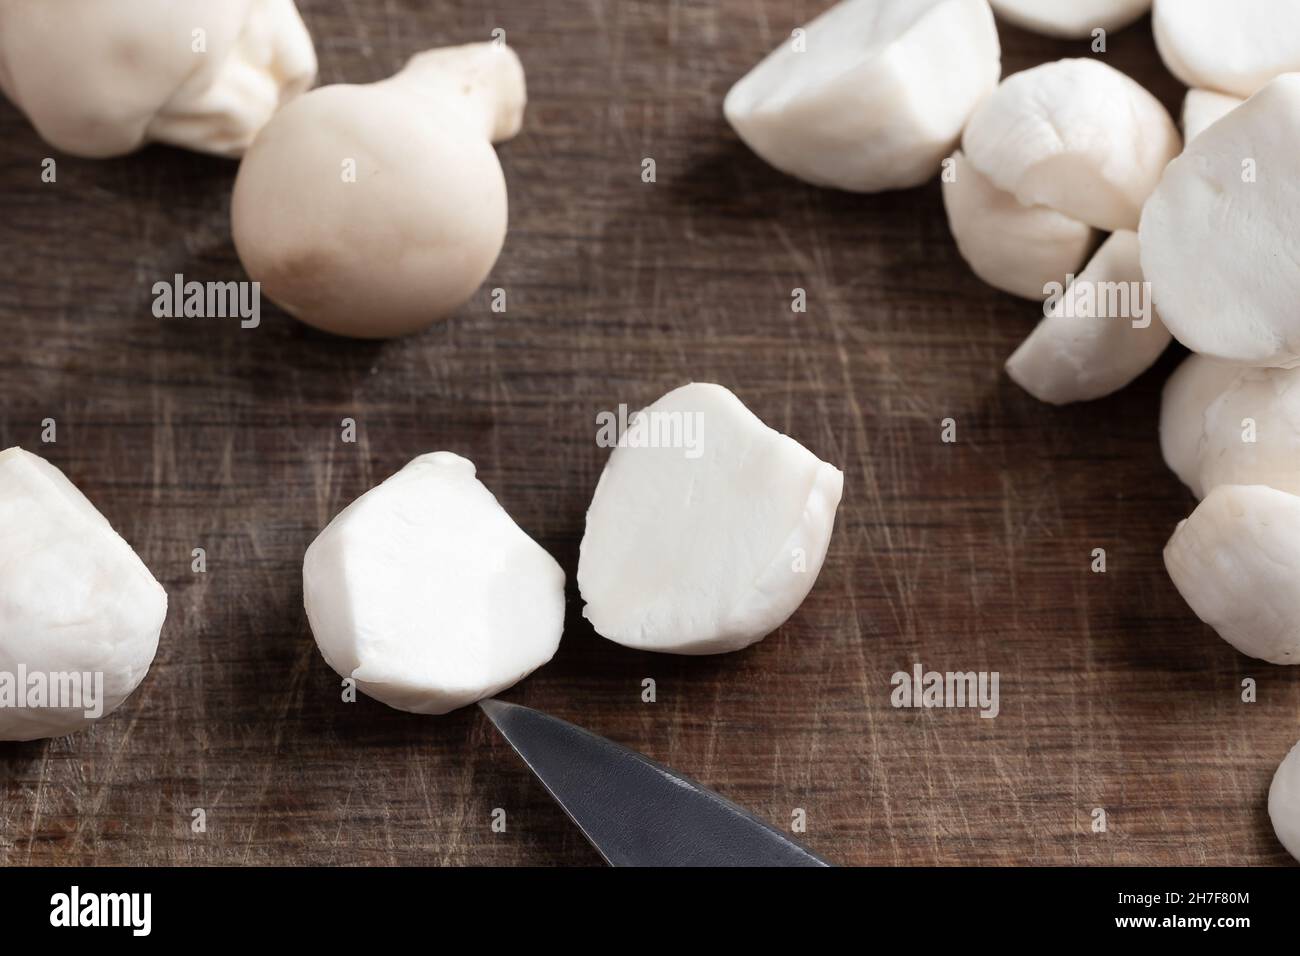 Cooking edible puffball mushrooms. Cutting peeled mushrooms on a cutting board, closeup. Stock Photo